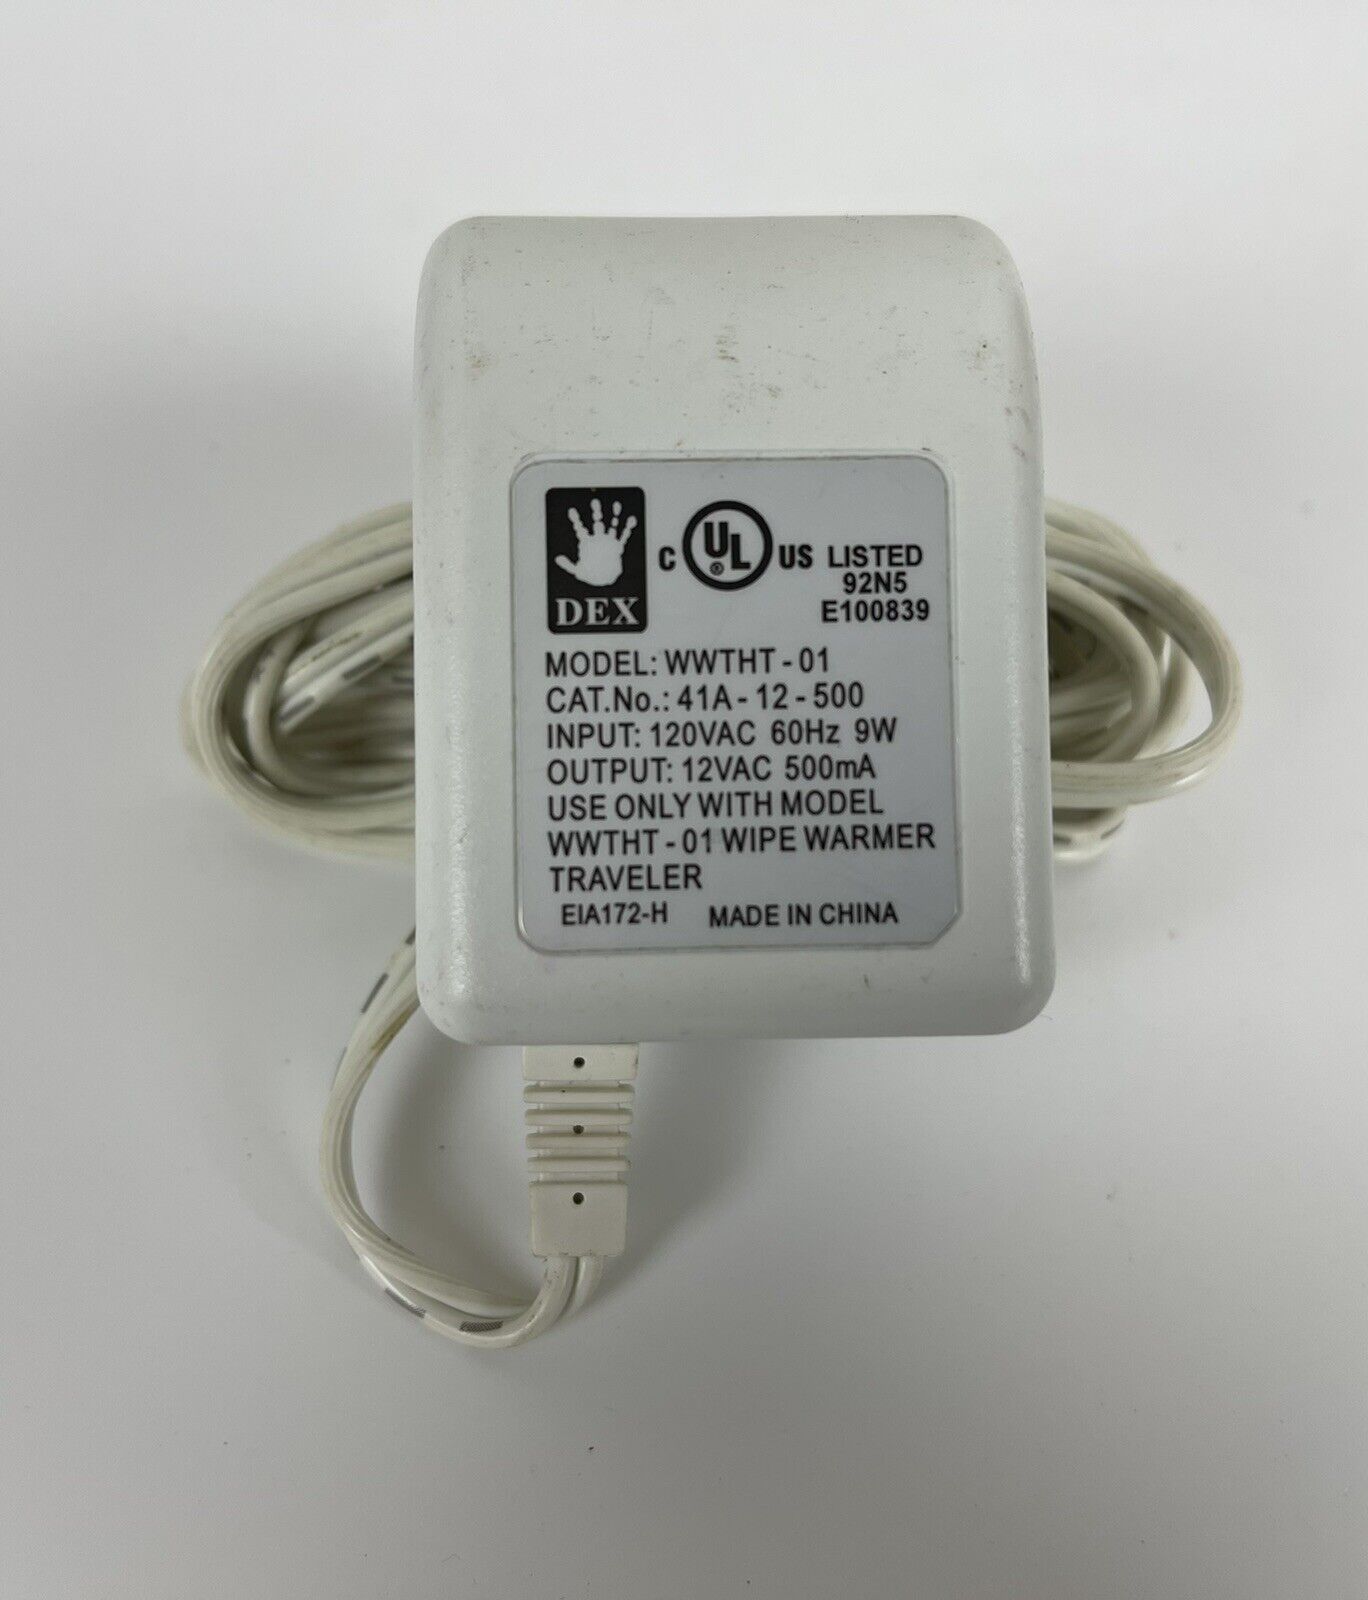 Original Power Supply AC Adapter for Dexbaby Travel Wipe Warmer WWTHT-01 12VAC Brand: Dex Type: AC/DC Adapter Conn